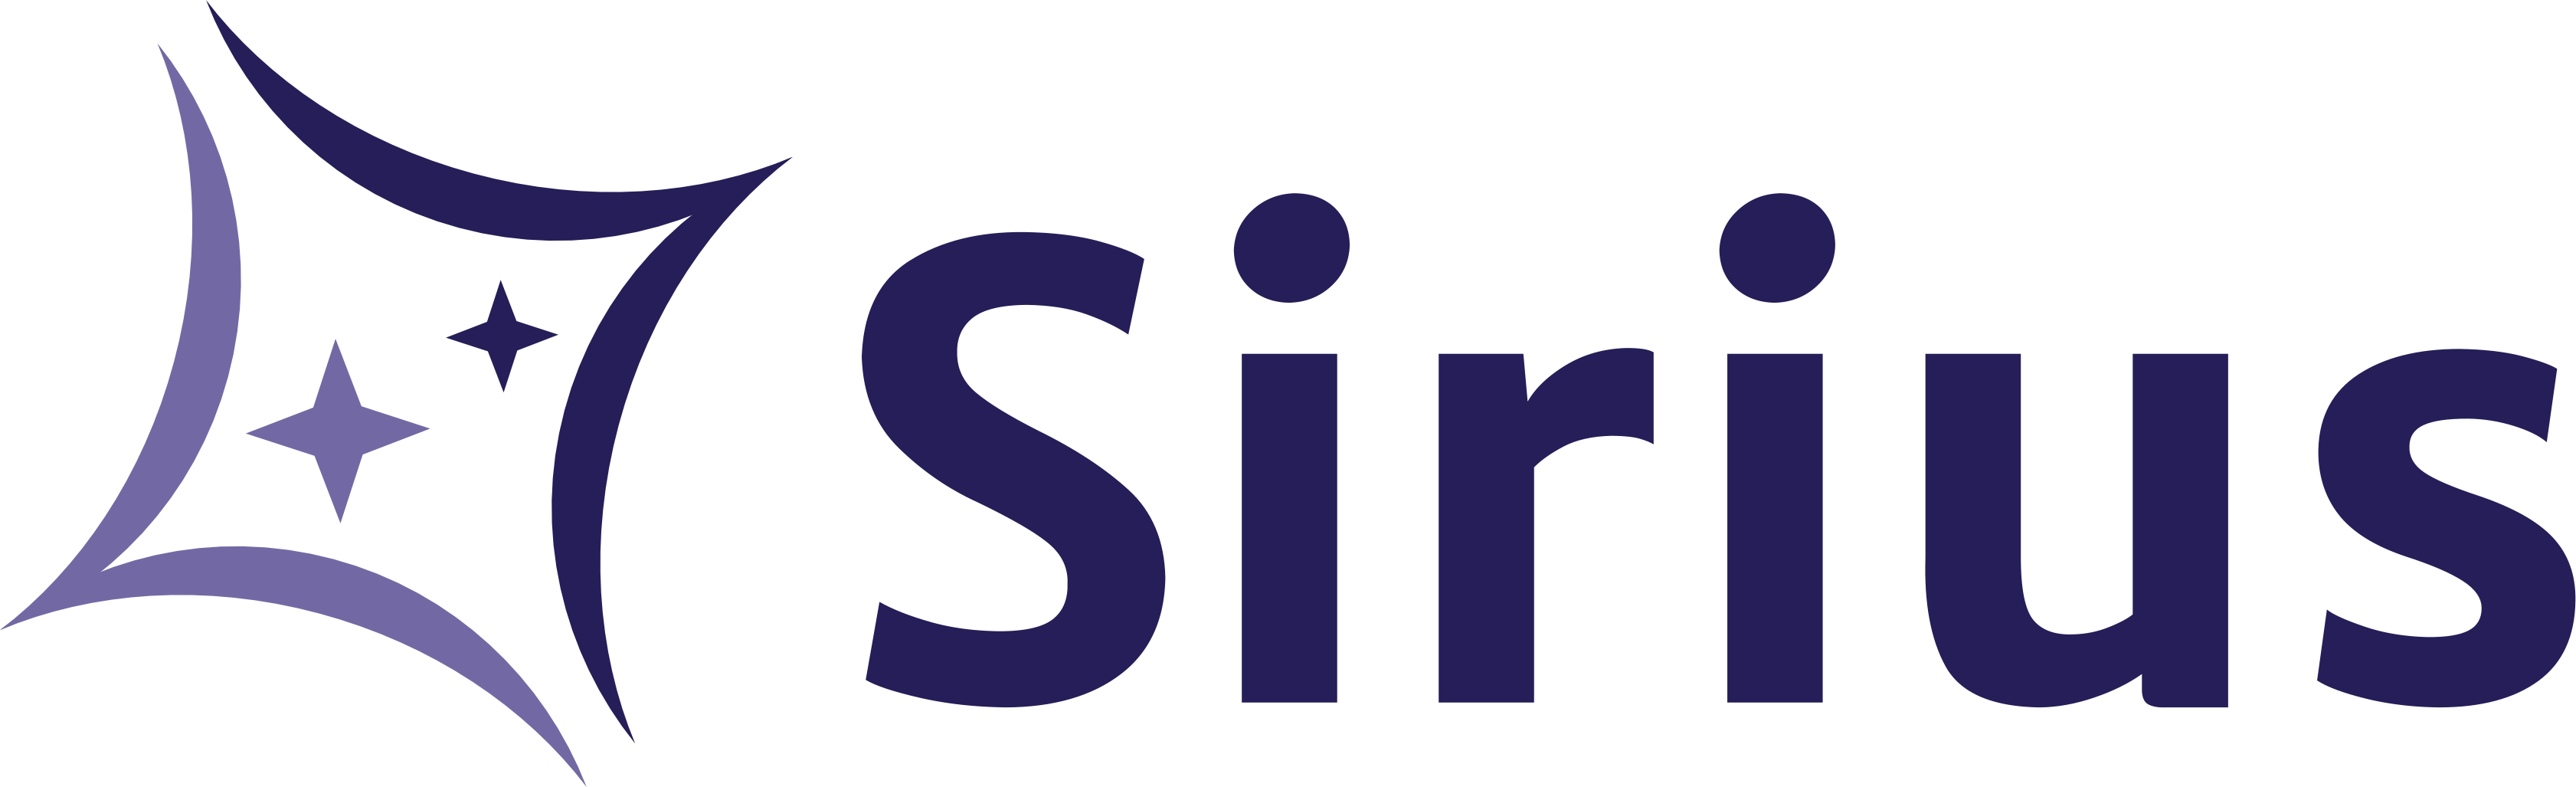 Eclipse Sirius logo